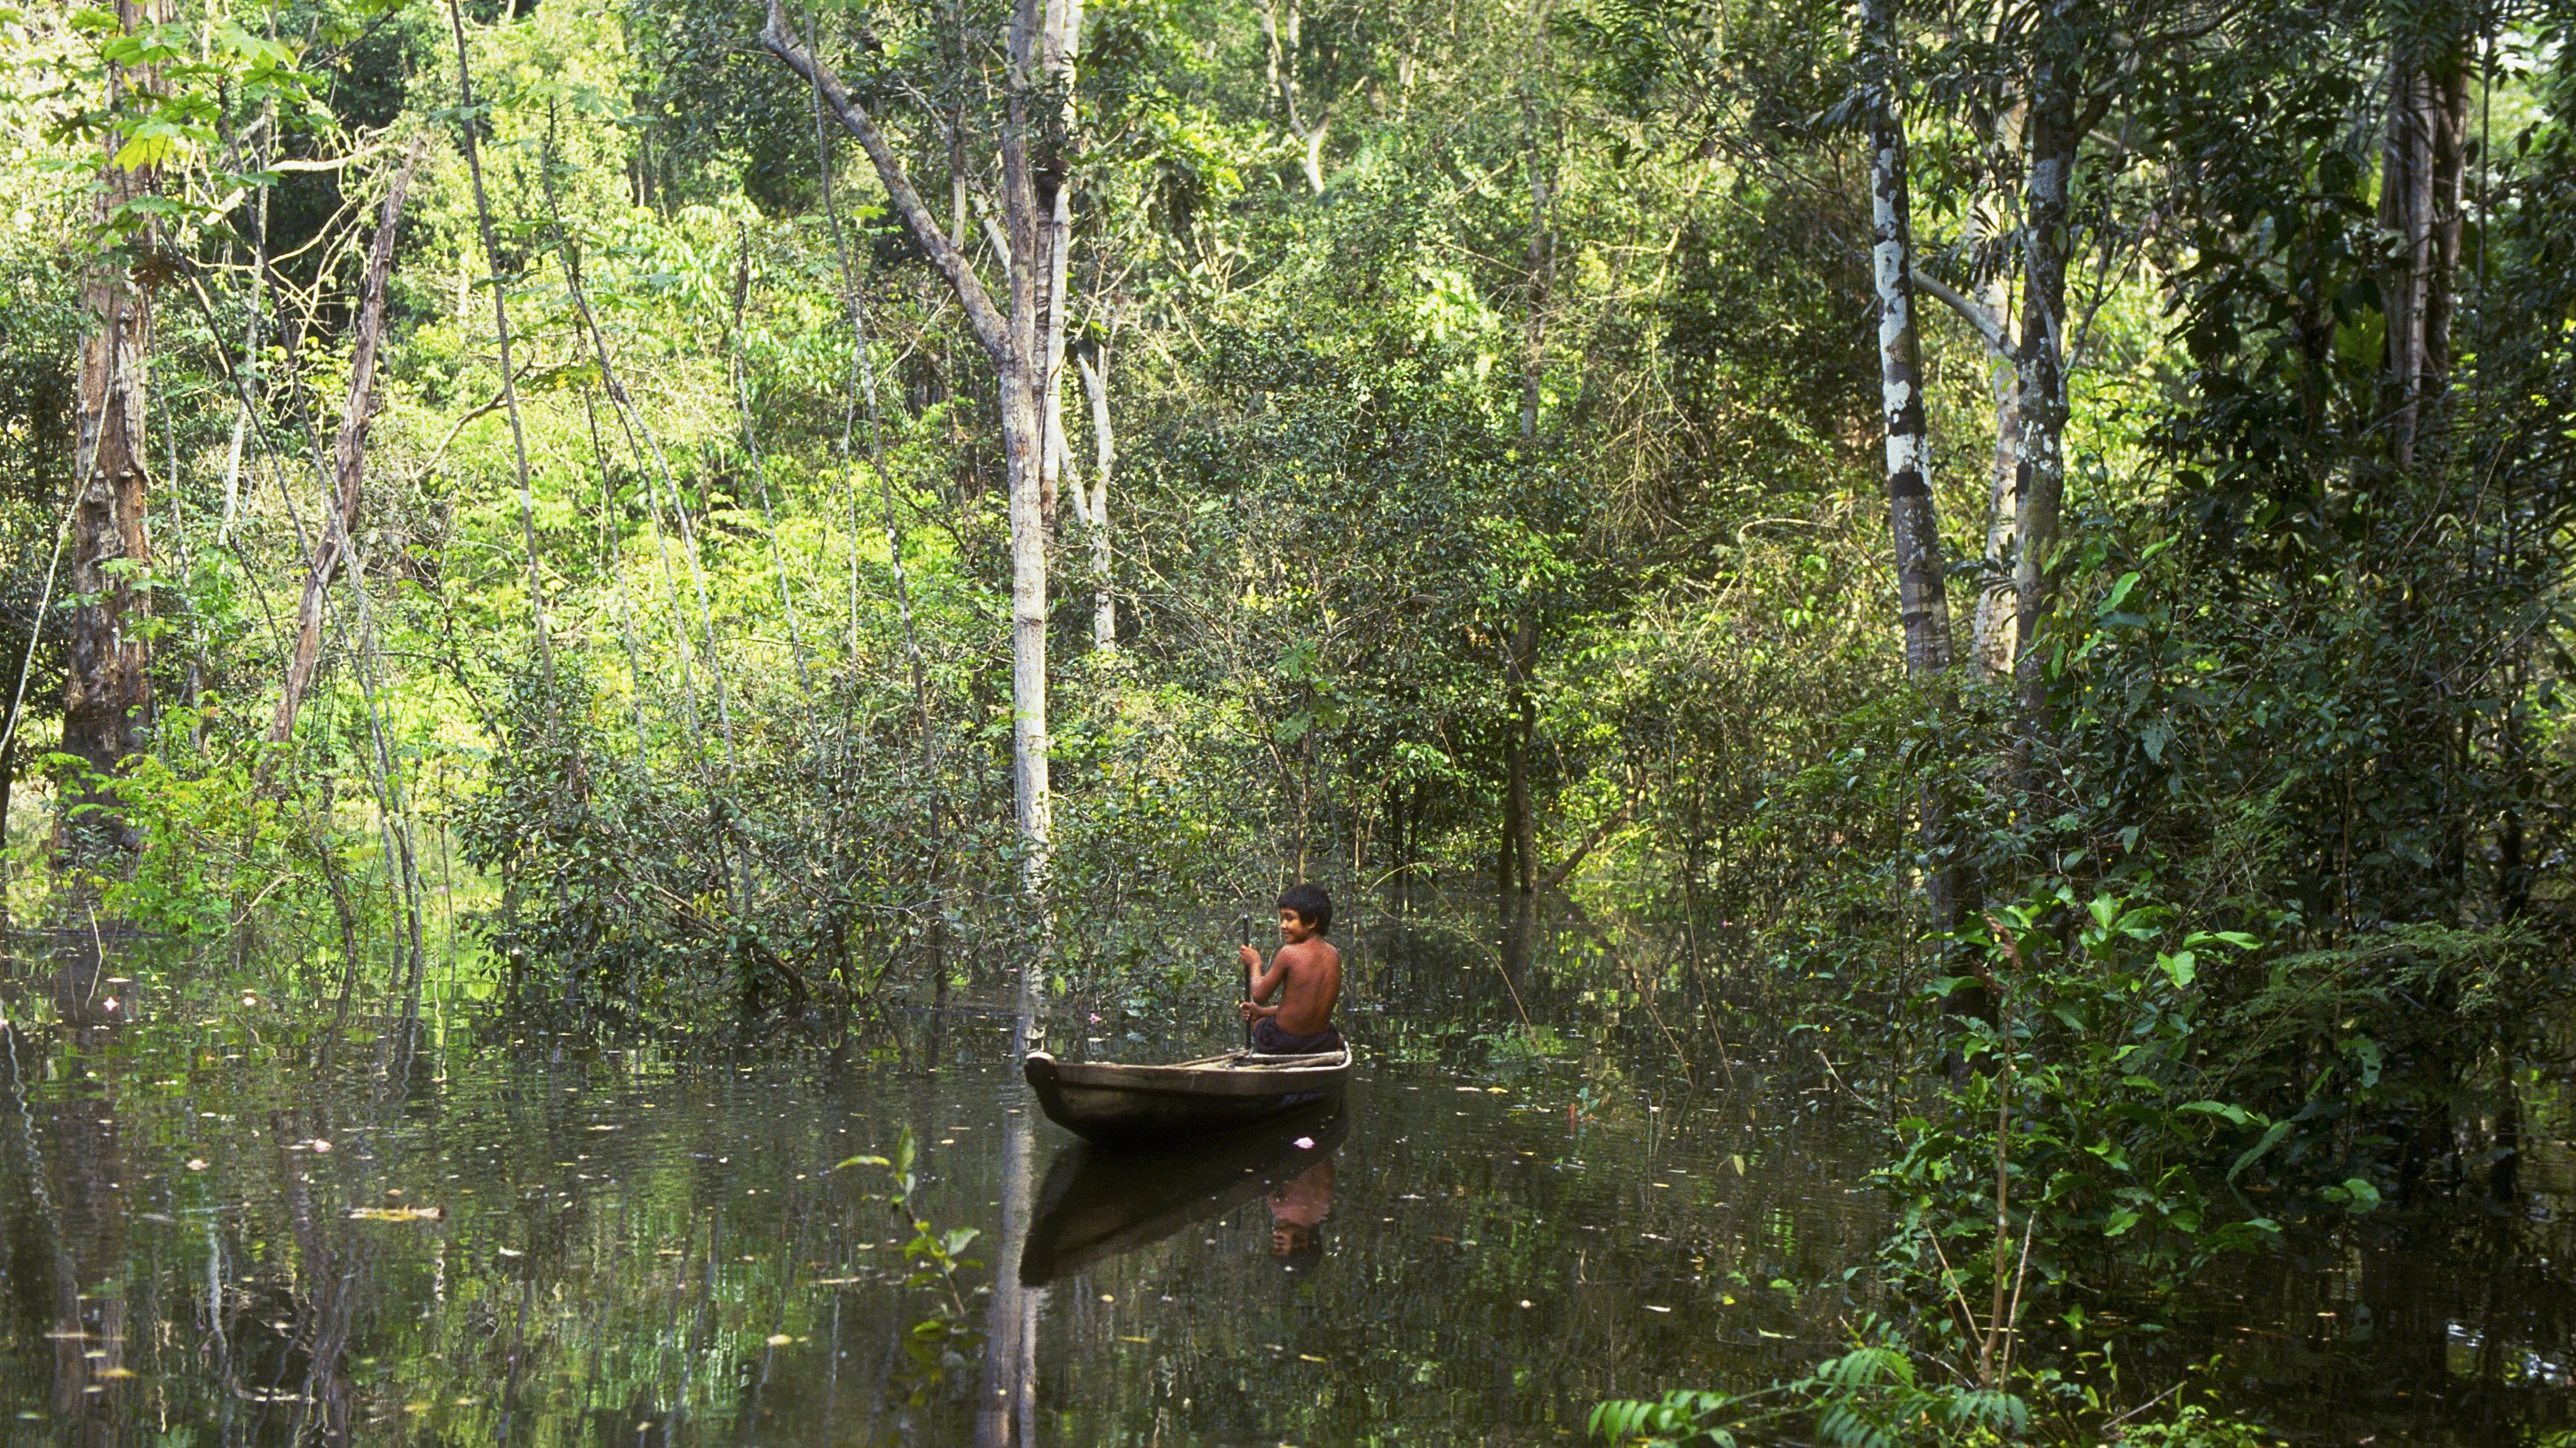 Boy in Dugout Canoe in Amazon Rainforest